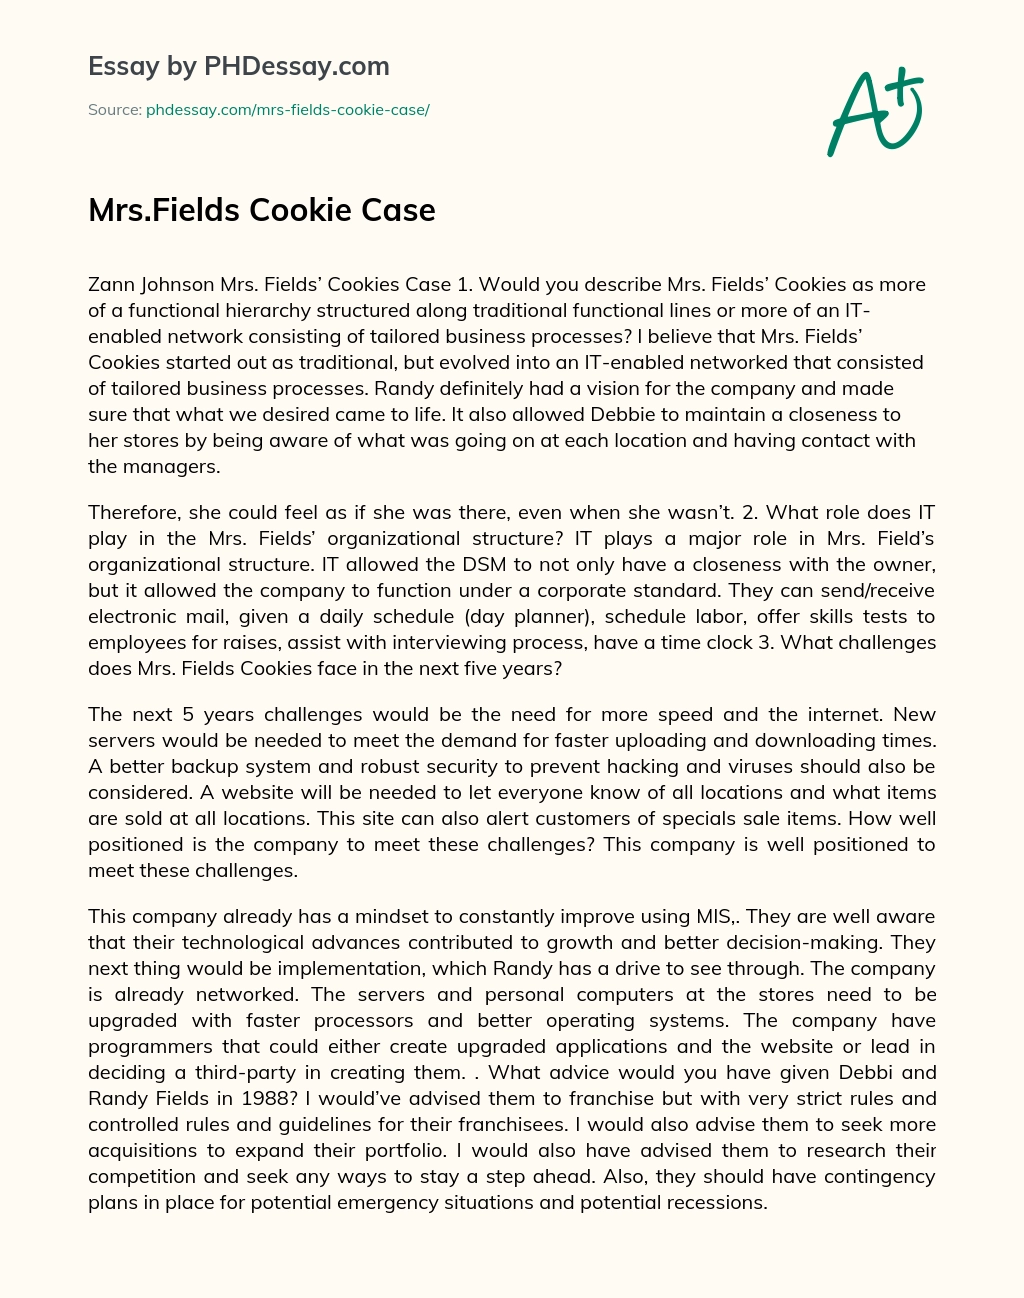 Mrs.Fields Cookie Case essay